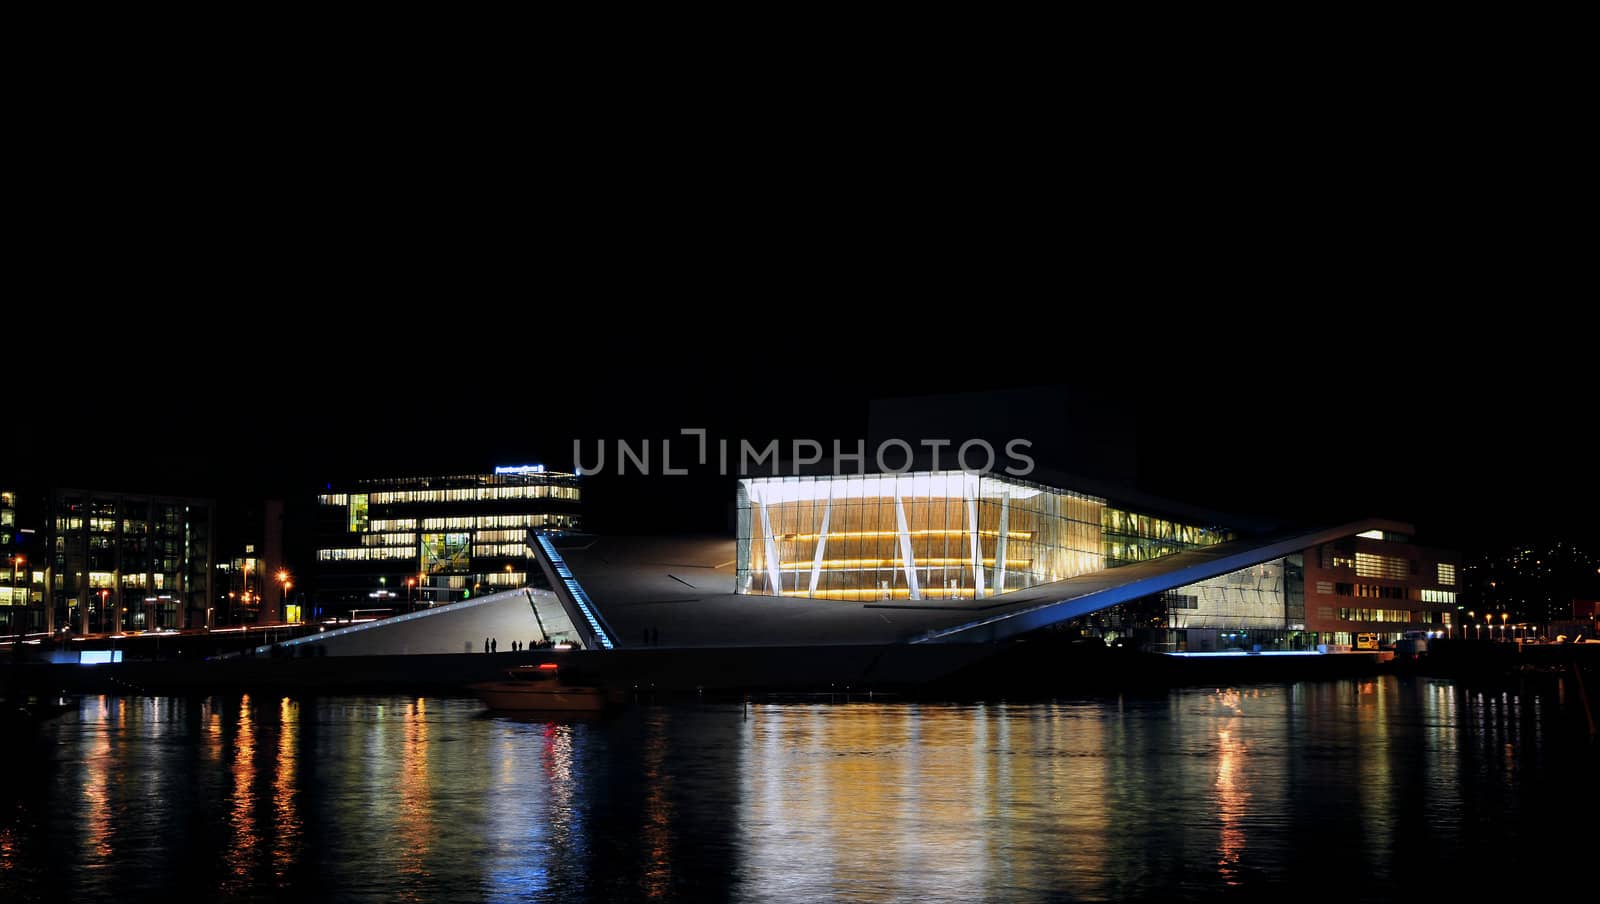 New opera house in Oslo by night by Espevalen